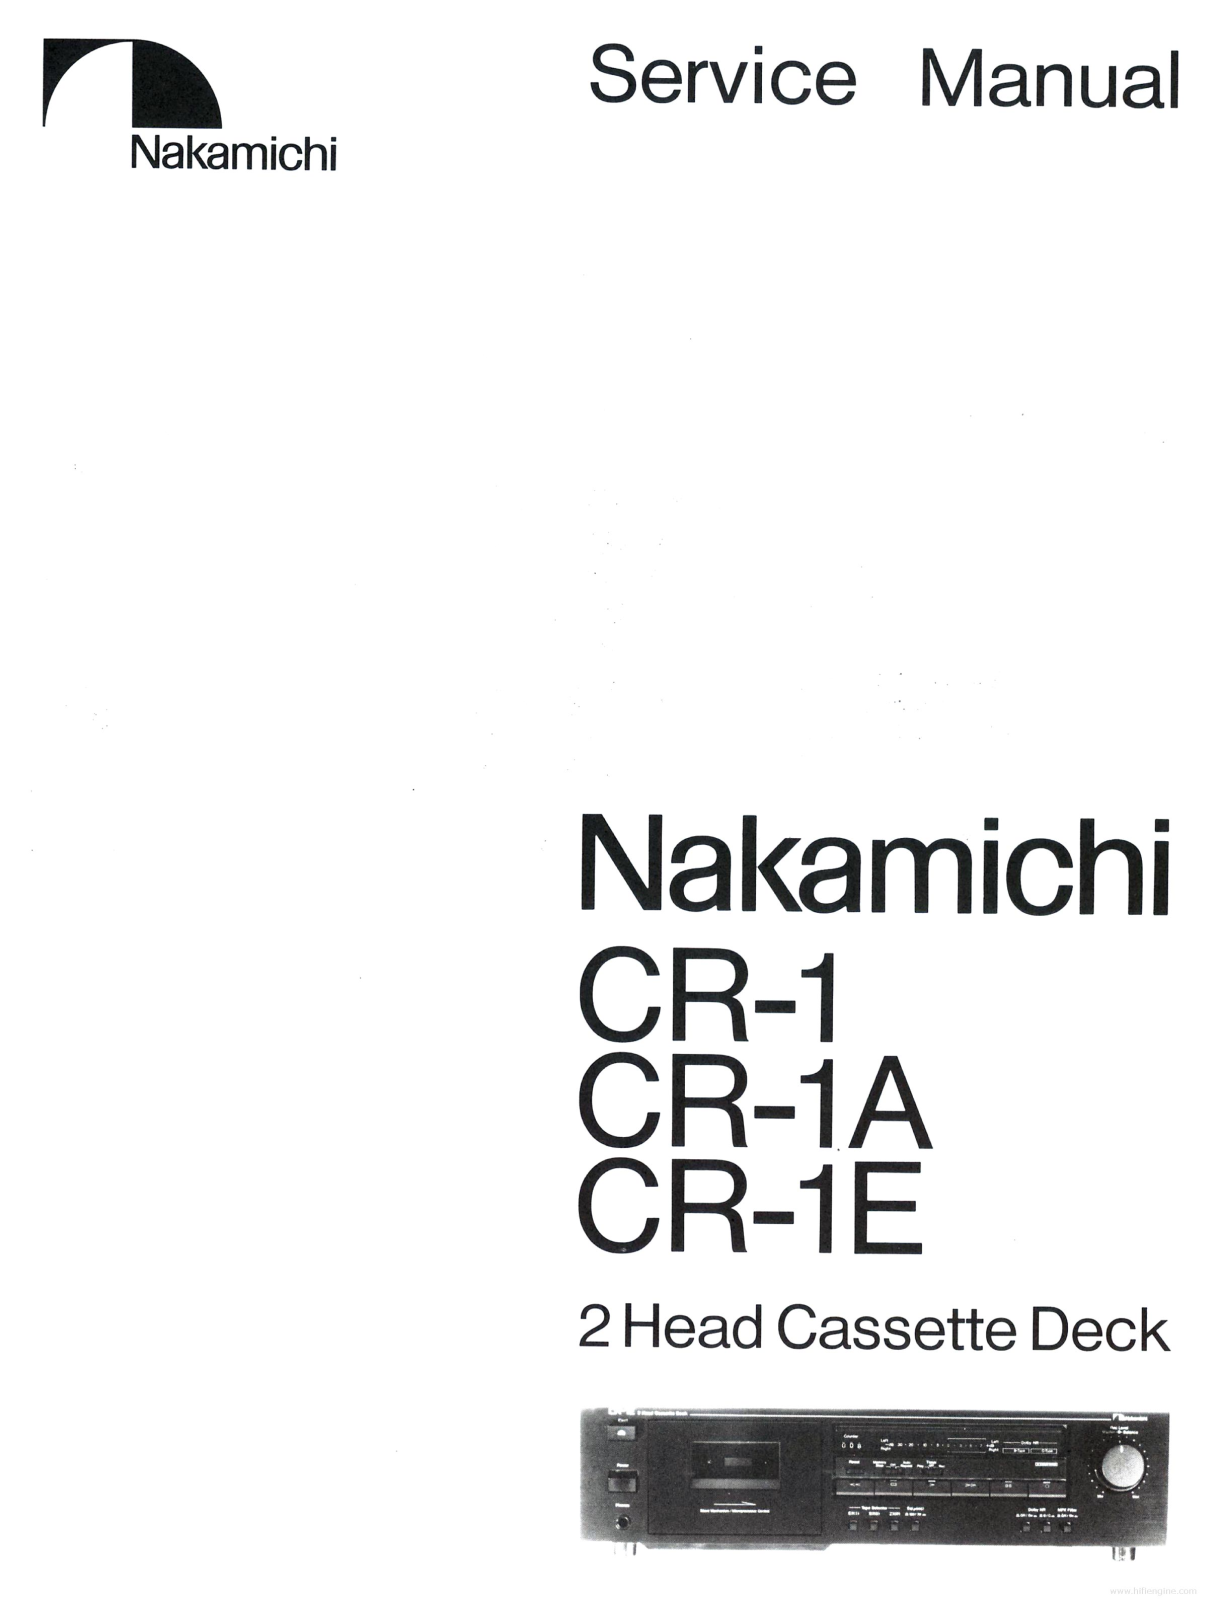 Nakamichi CR-1, CR-1A, CR-1CR, CR-1E Service Manual